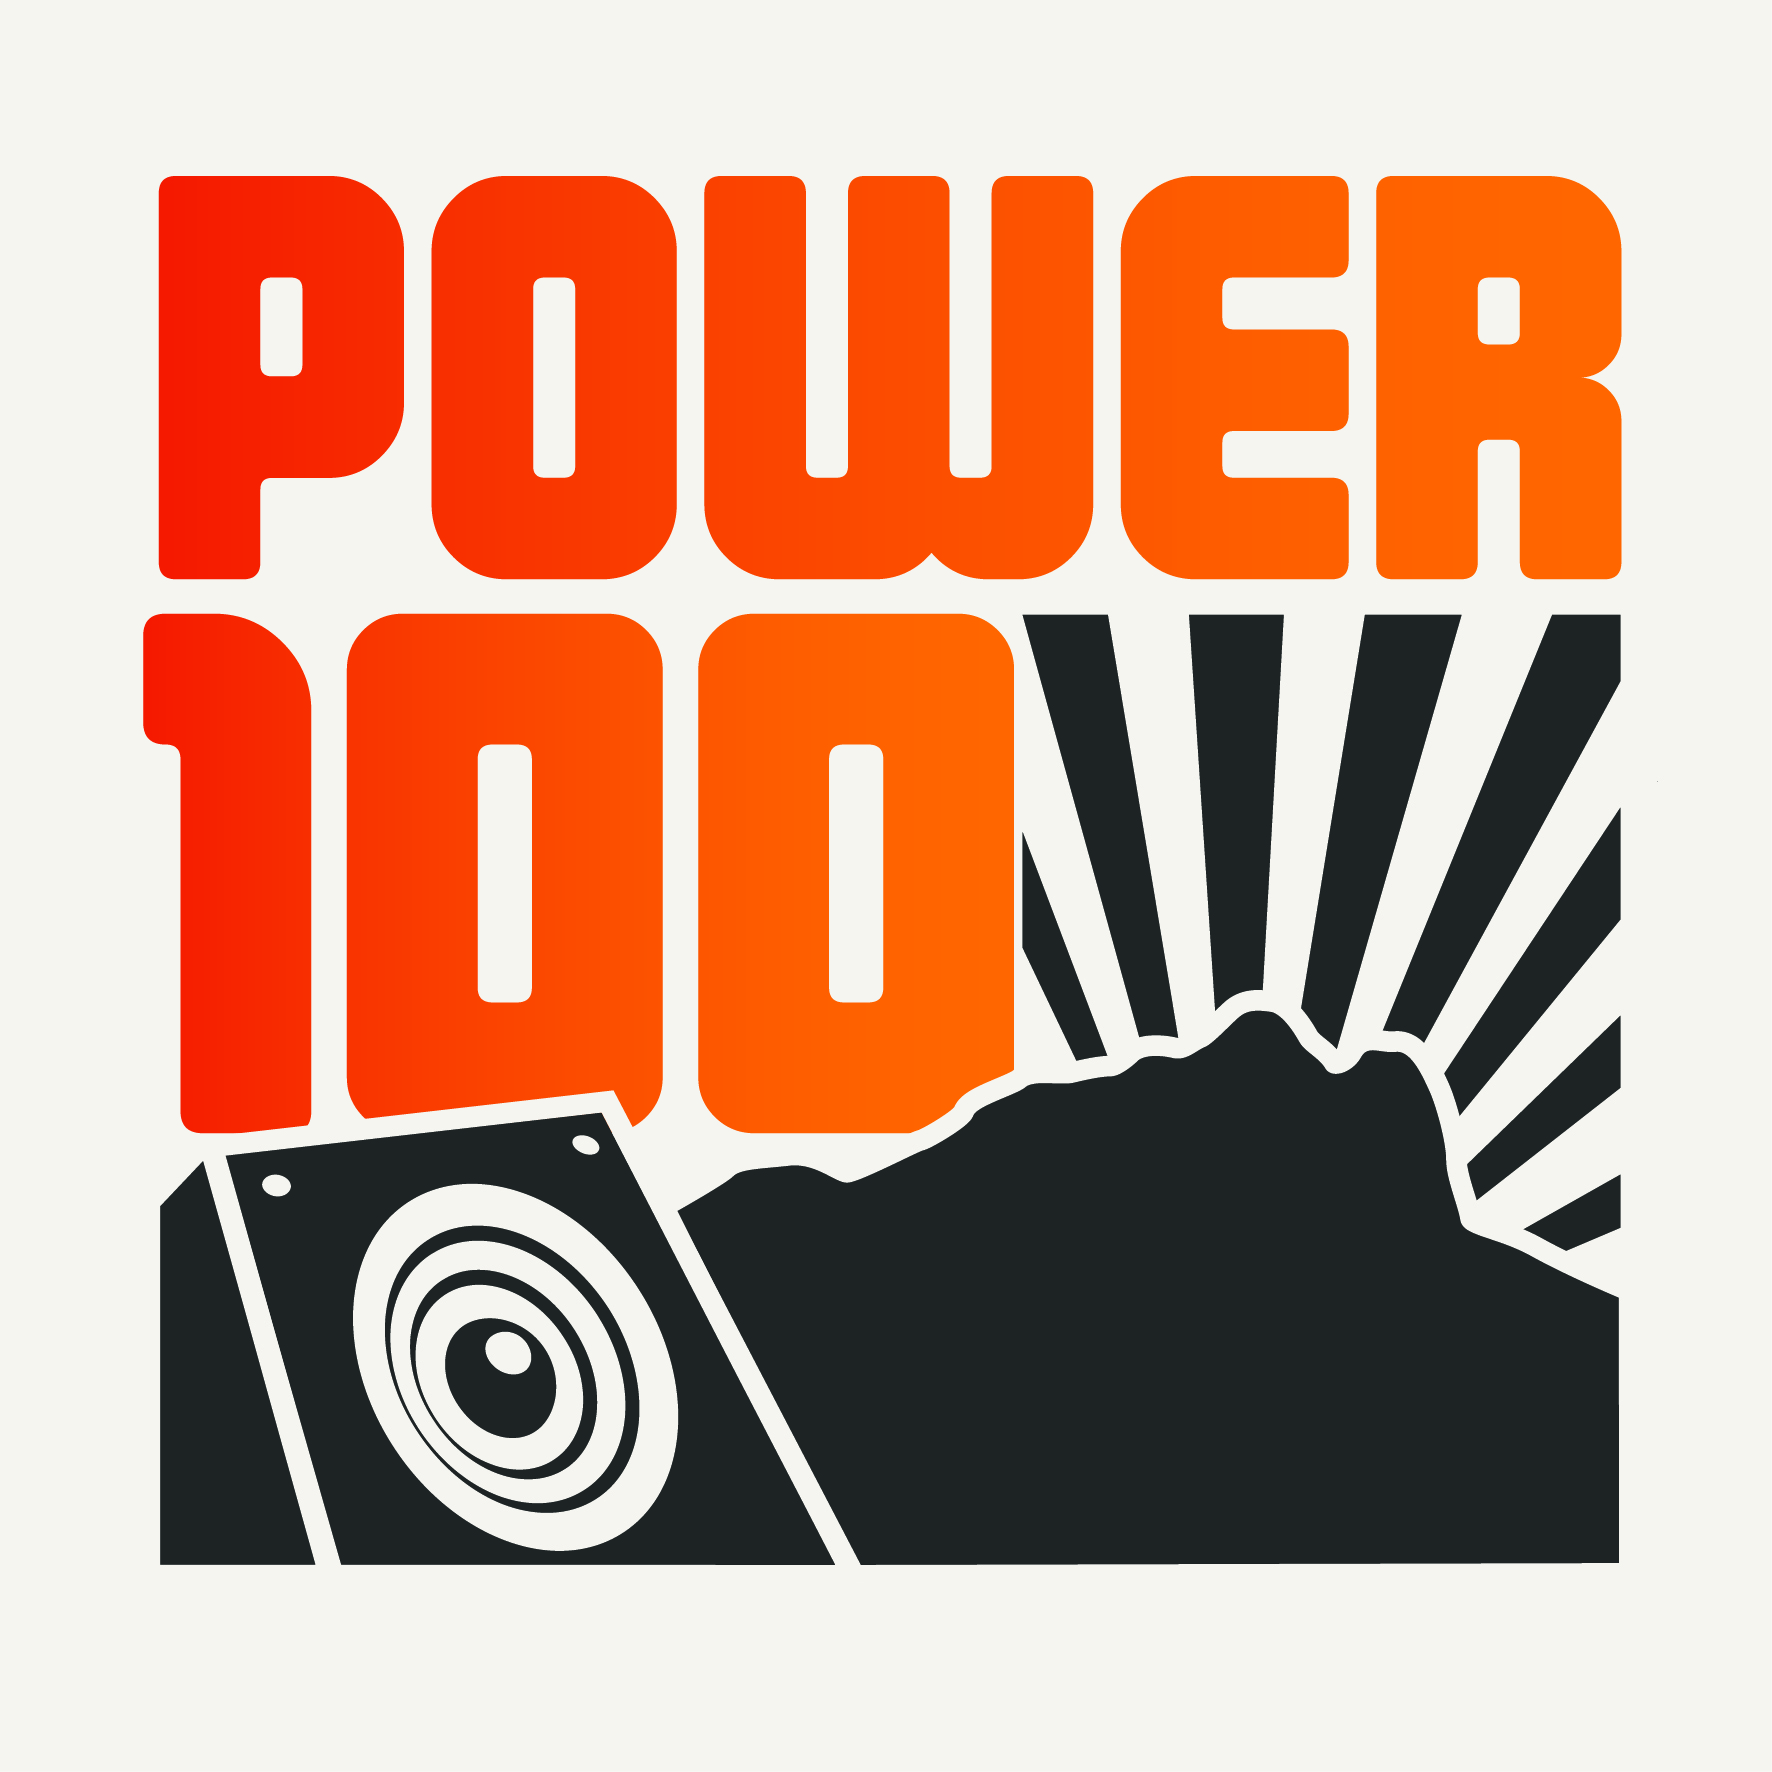 POWER100